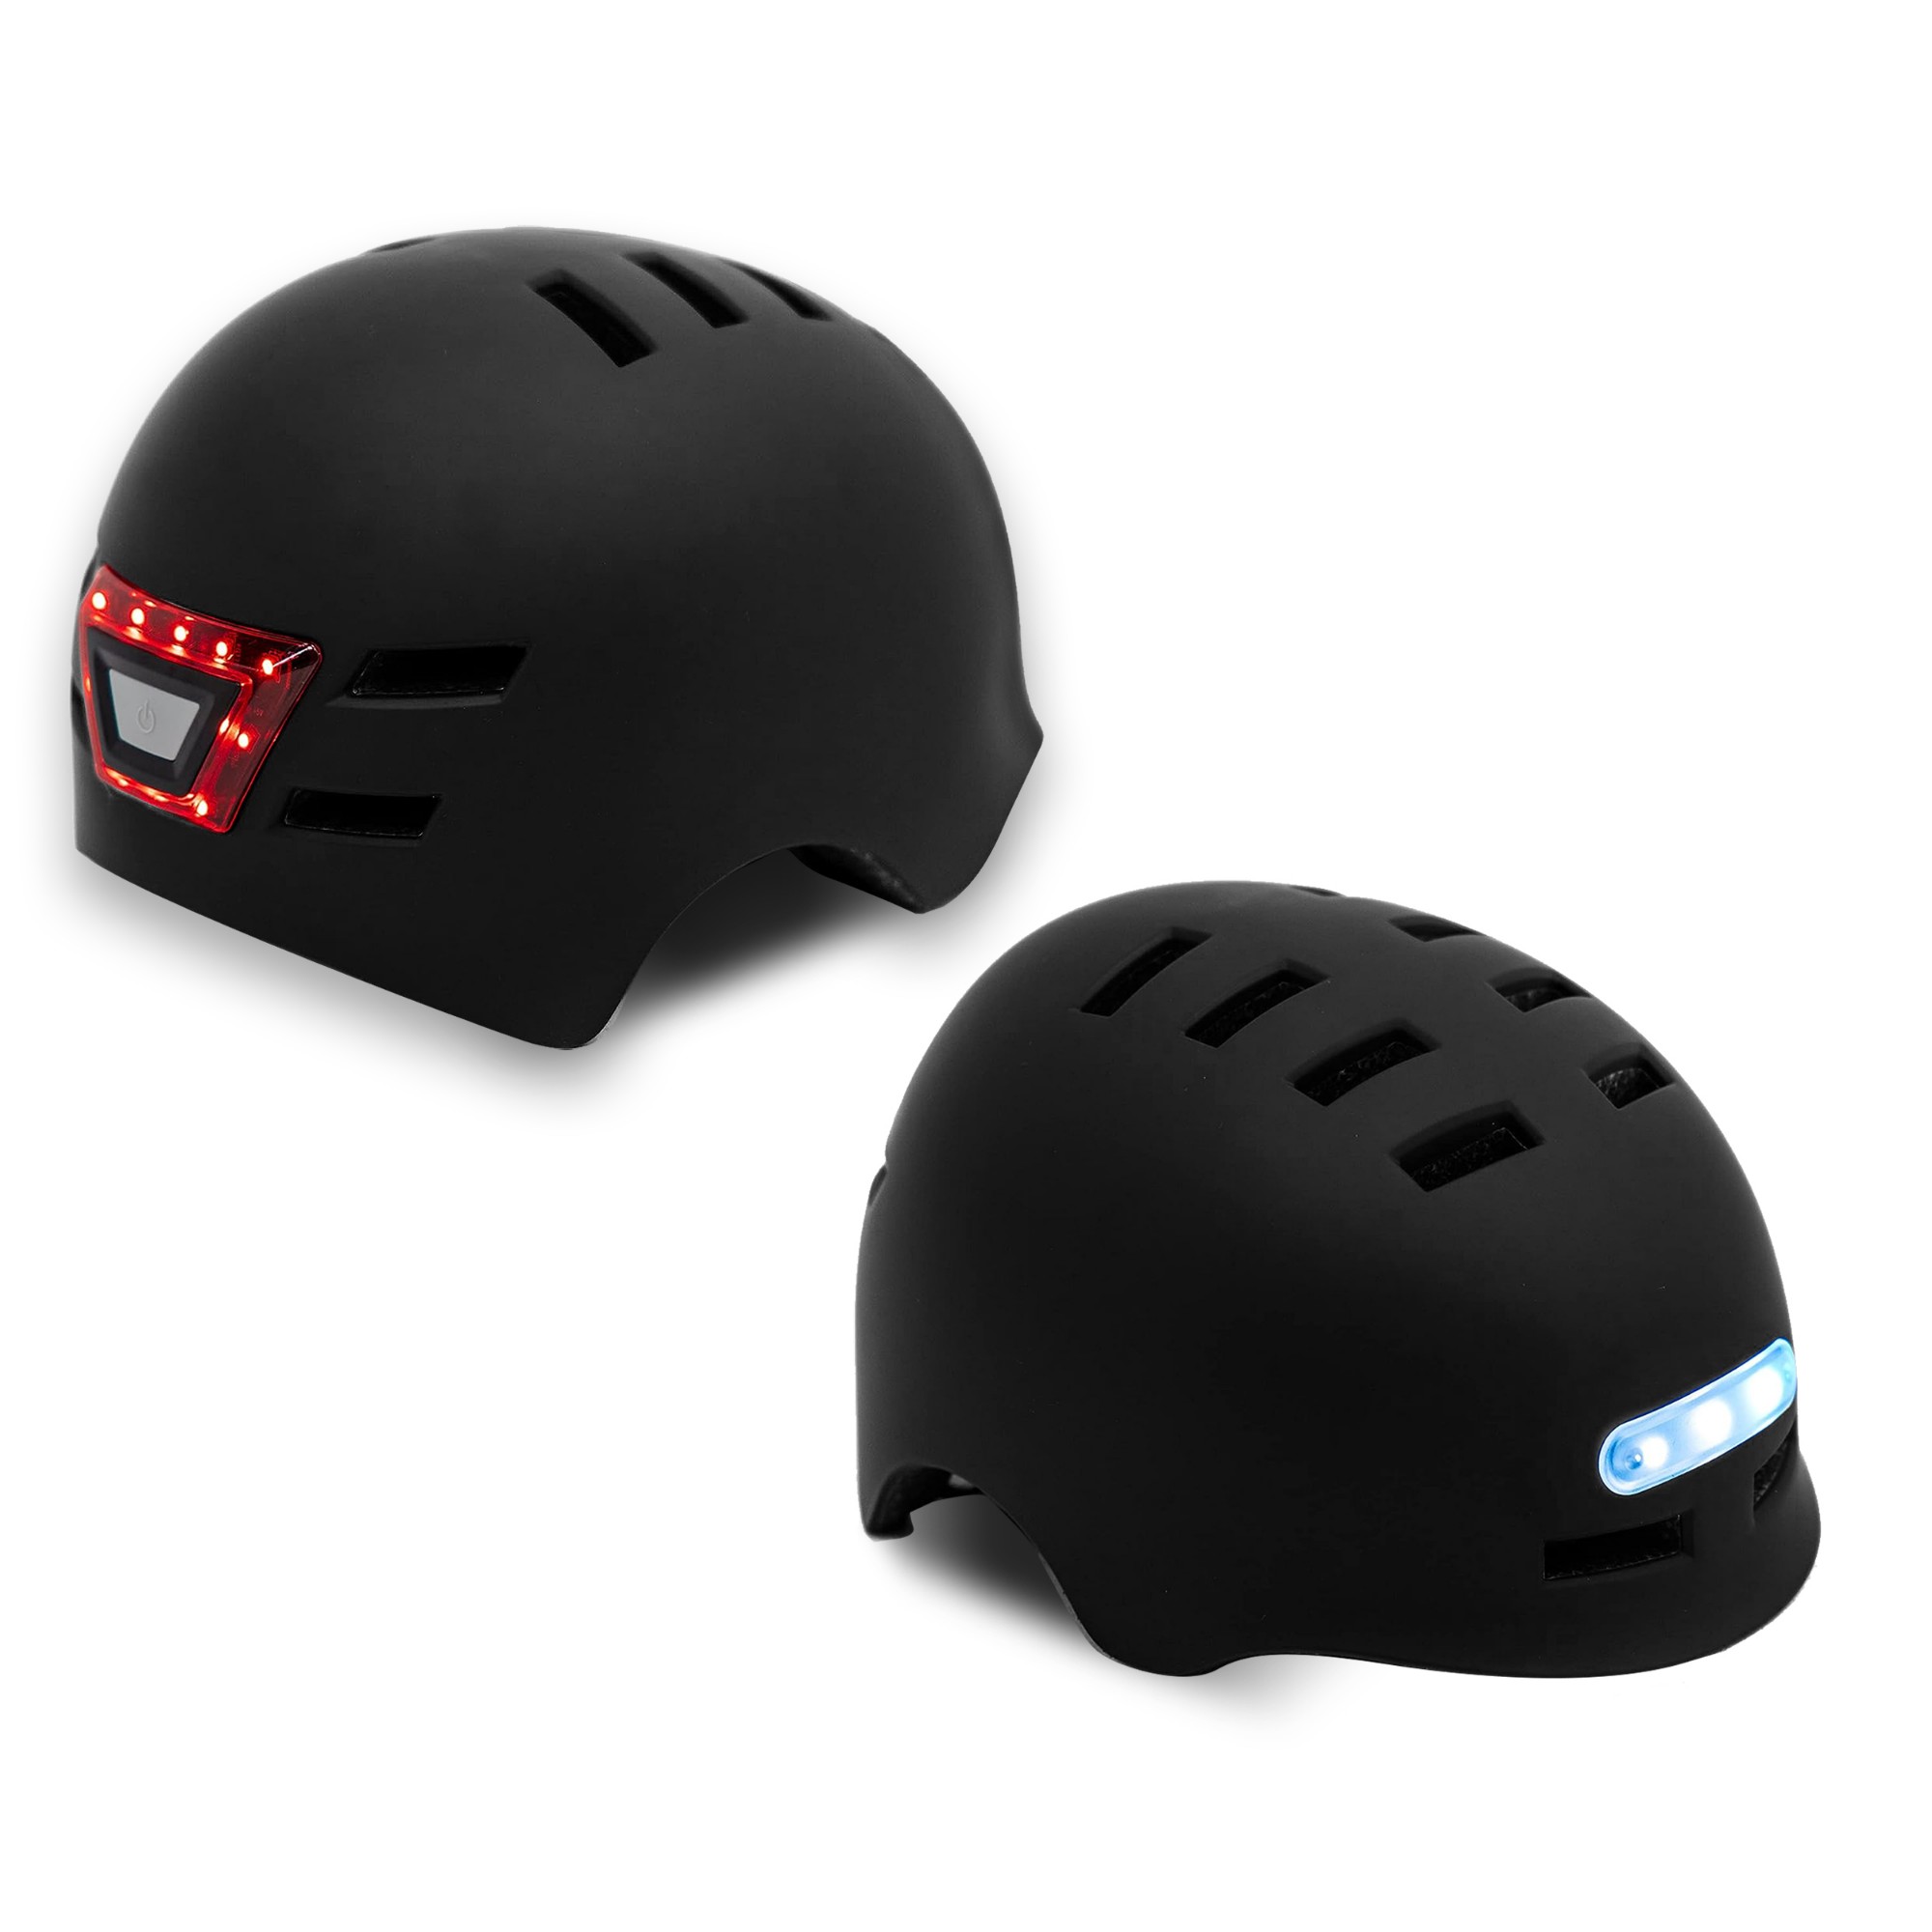 KY-Z002-LARGE BUSBI Firefly Adult Helmet - Large Black